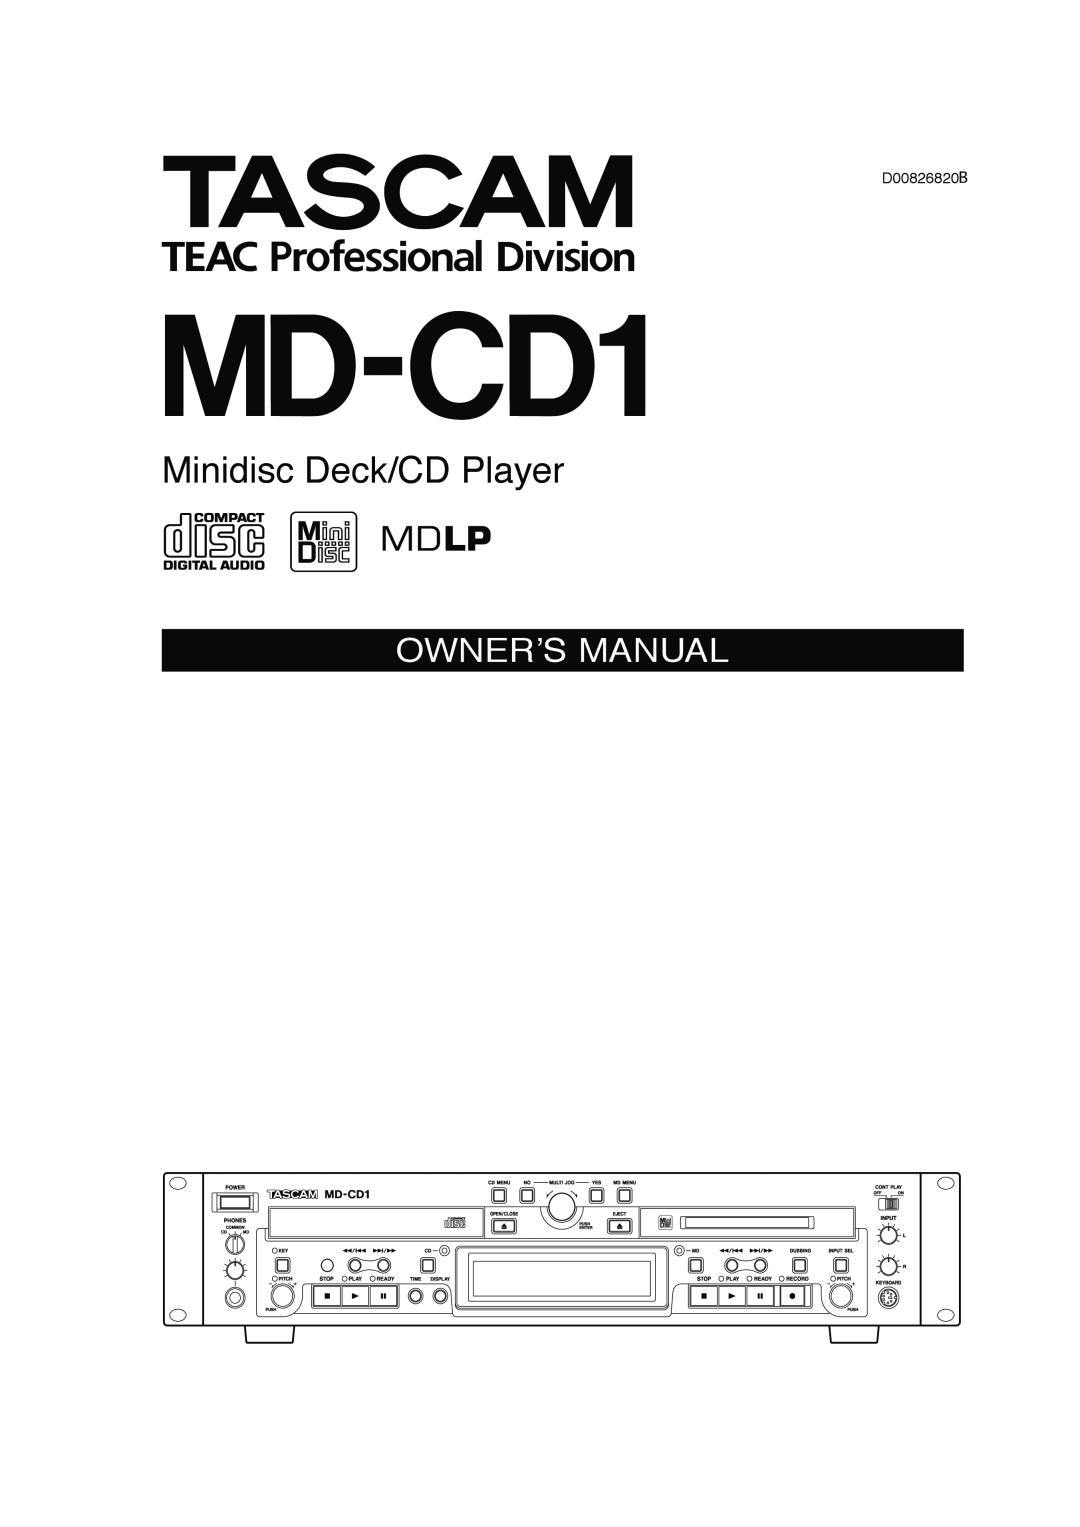 Tascam MD-CD1 owner manual Minidisc Deck/CD Player 